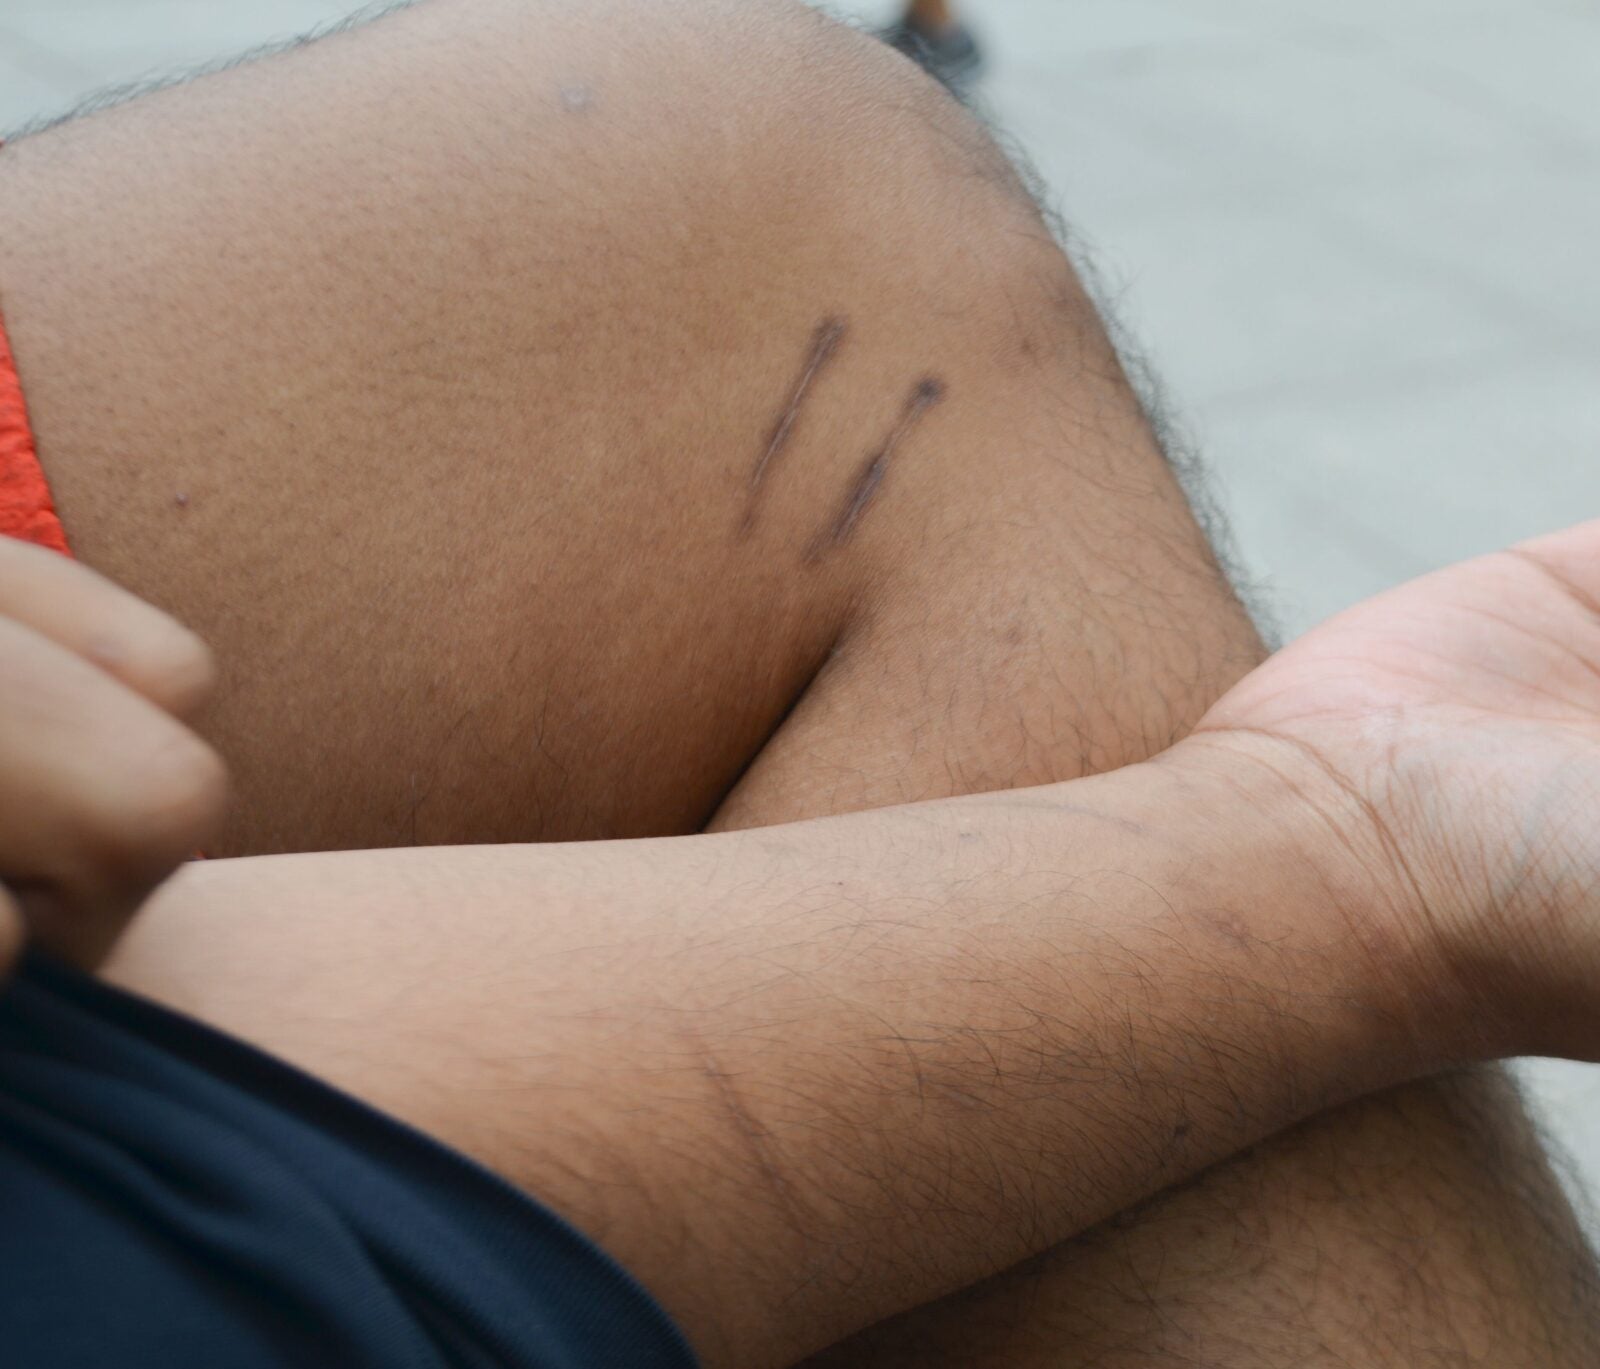 snake bite scar on a man's leg